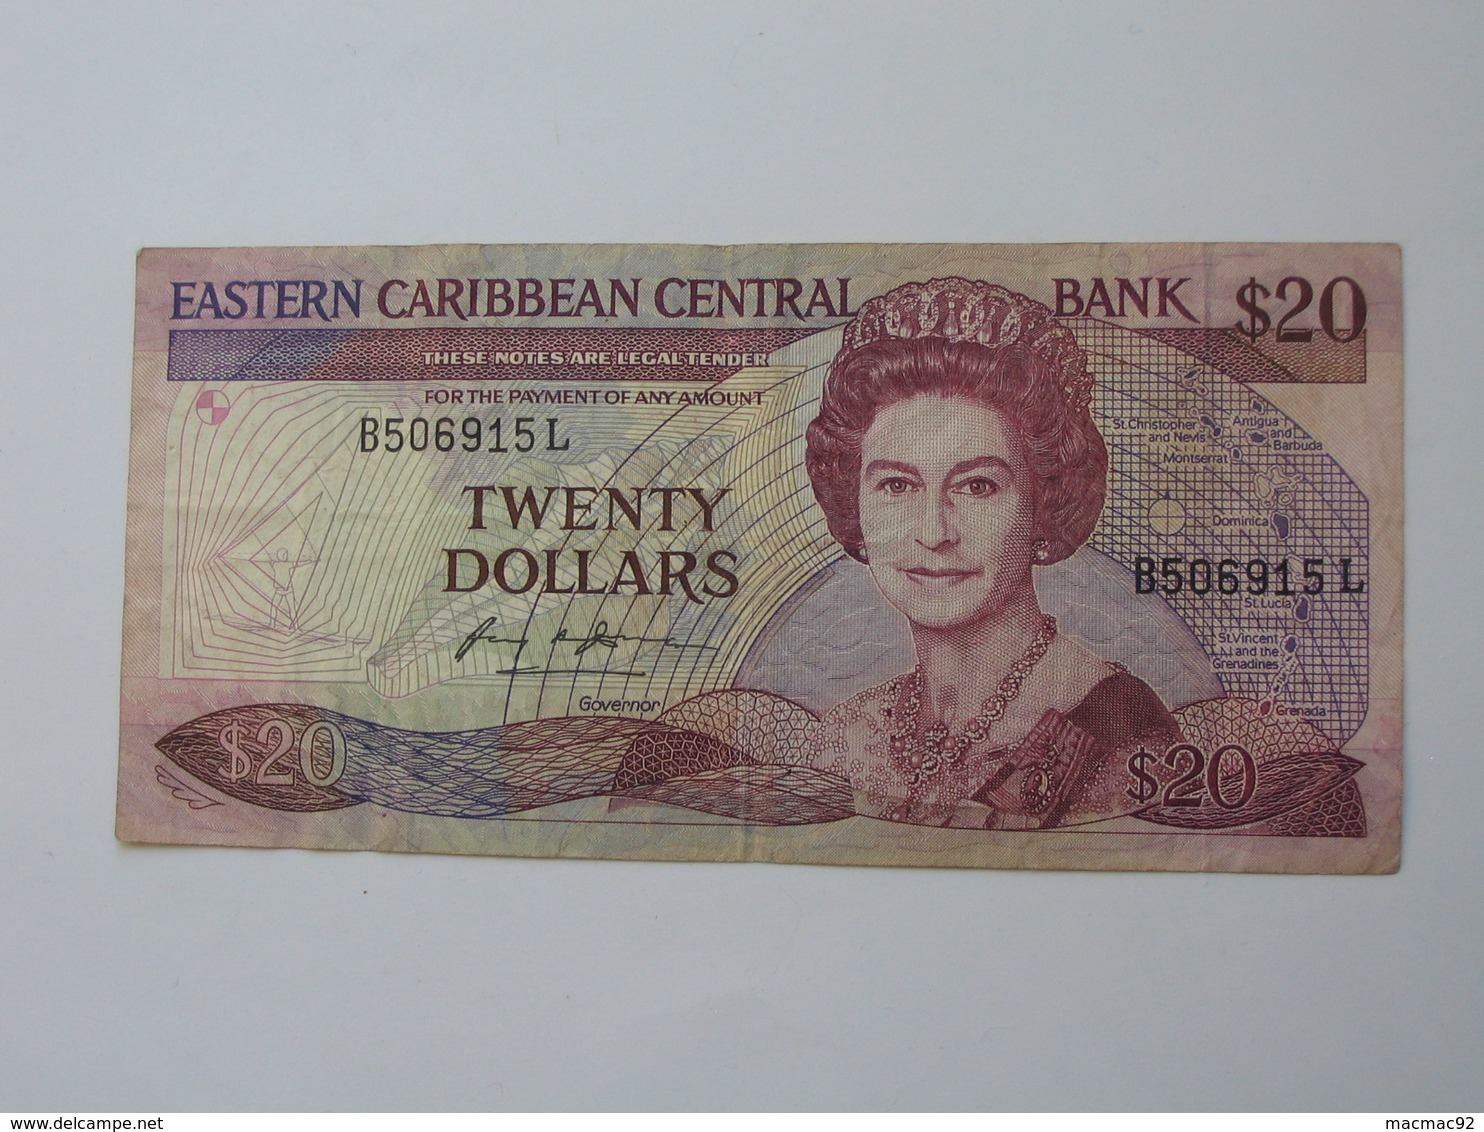 20 Twenty Dollars 1987-1988 Eastern Caribbean Central Bank **** EN ACHAT IMMEDIAT **** - Caraïbes Orientales